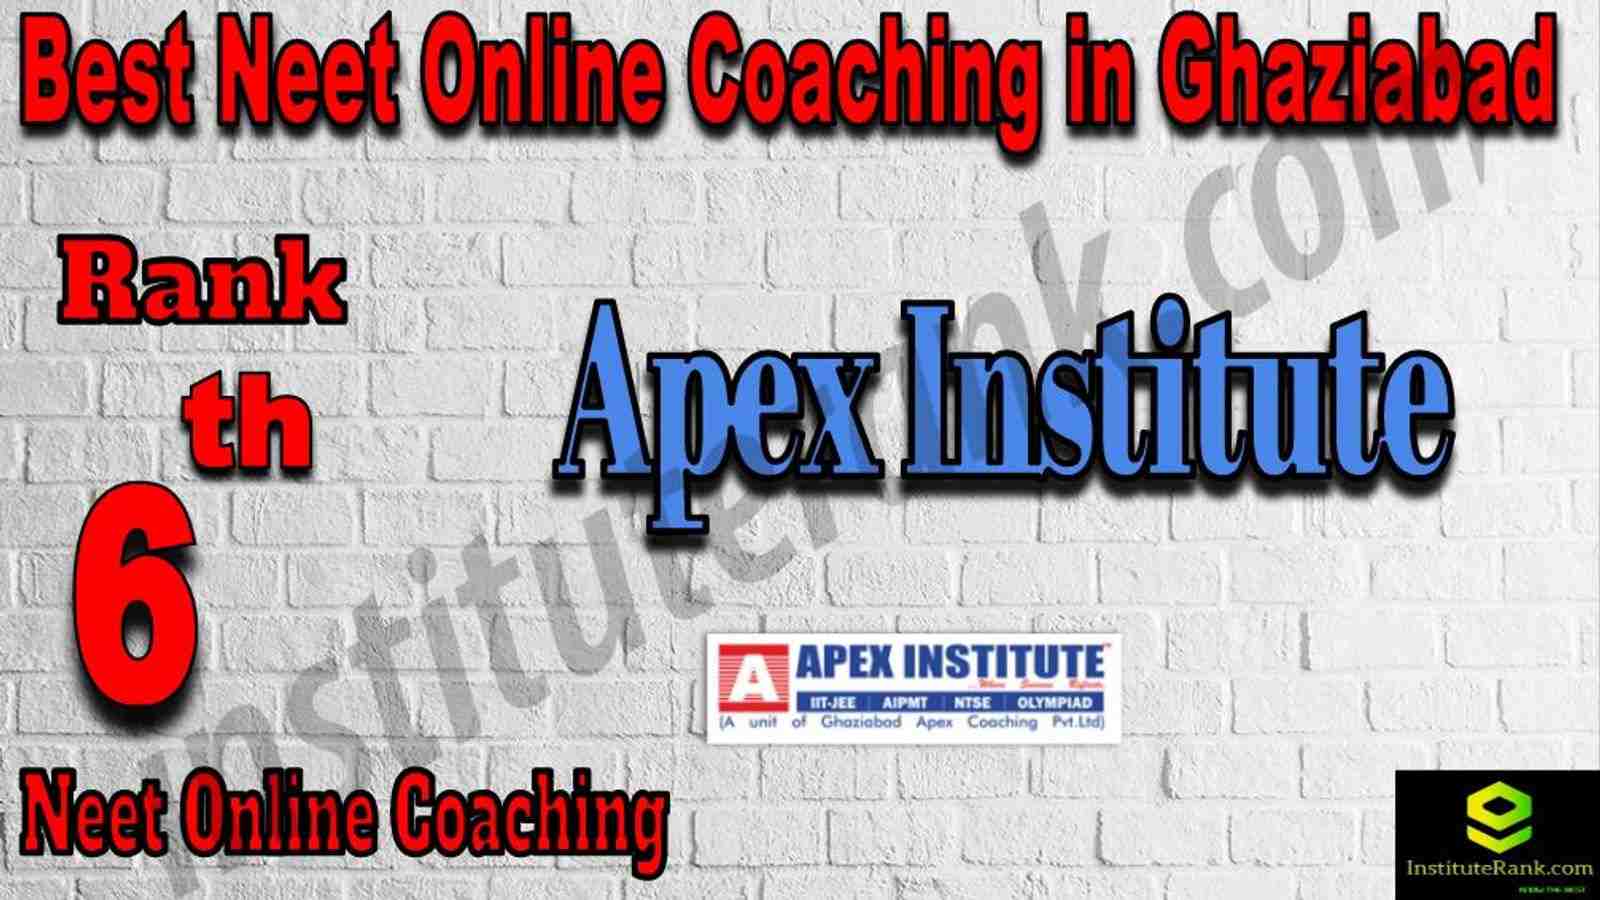 6th Best Neet Online Coaching in Ghaziabad